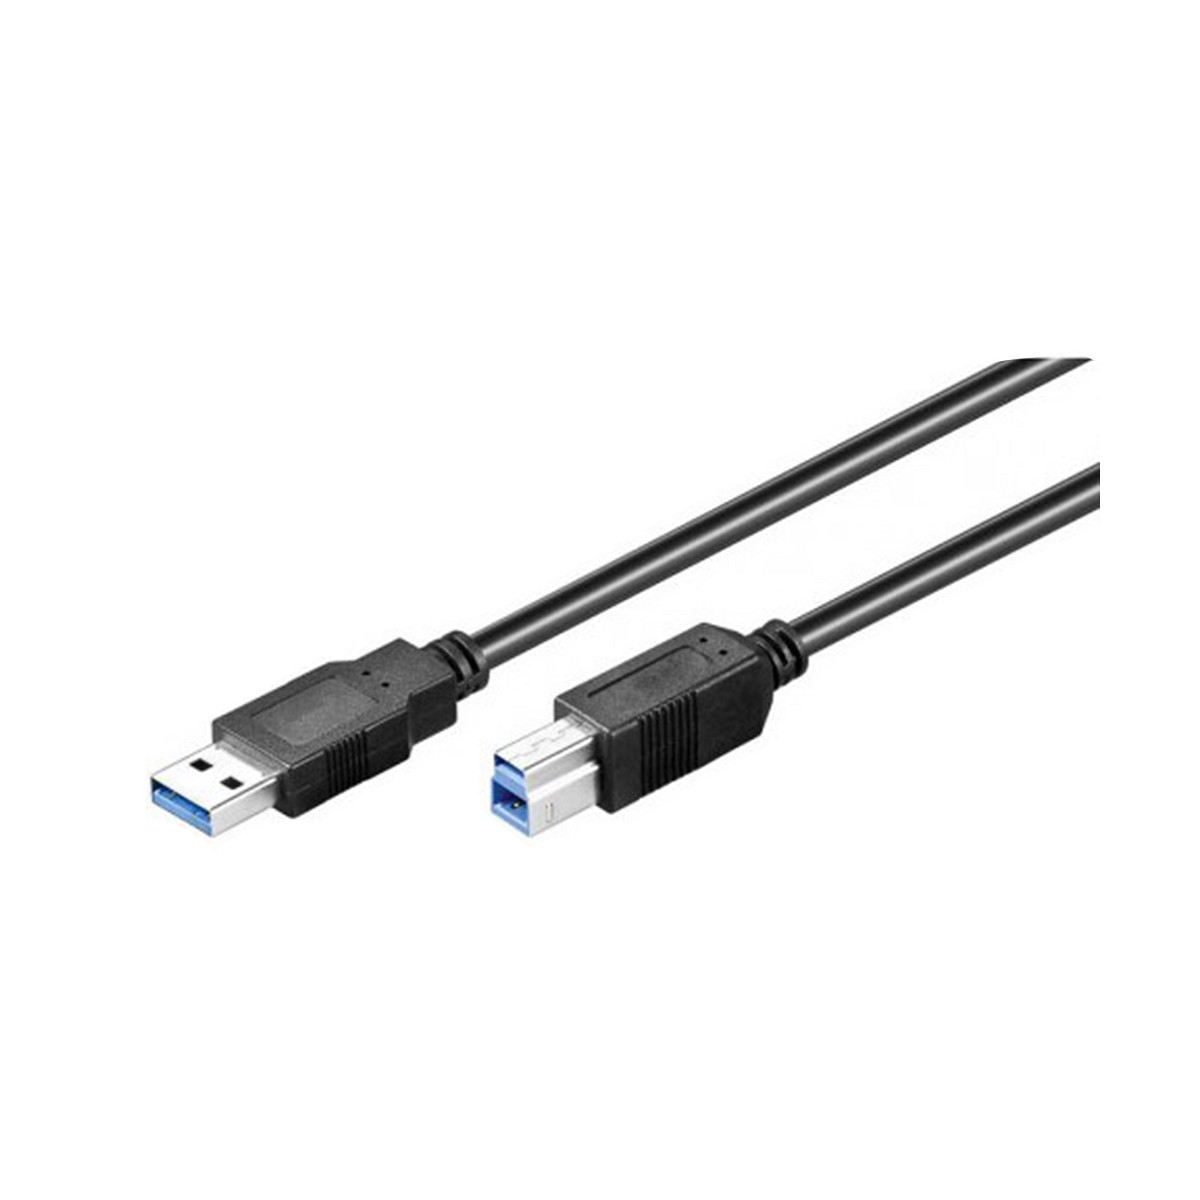 Cable usb 3.0 a-b 2m negro